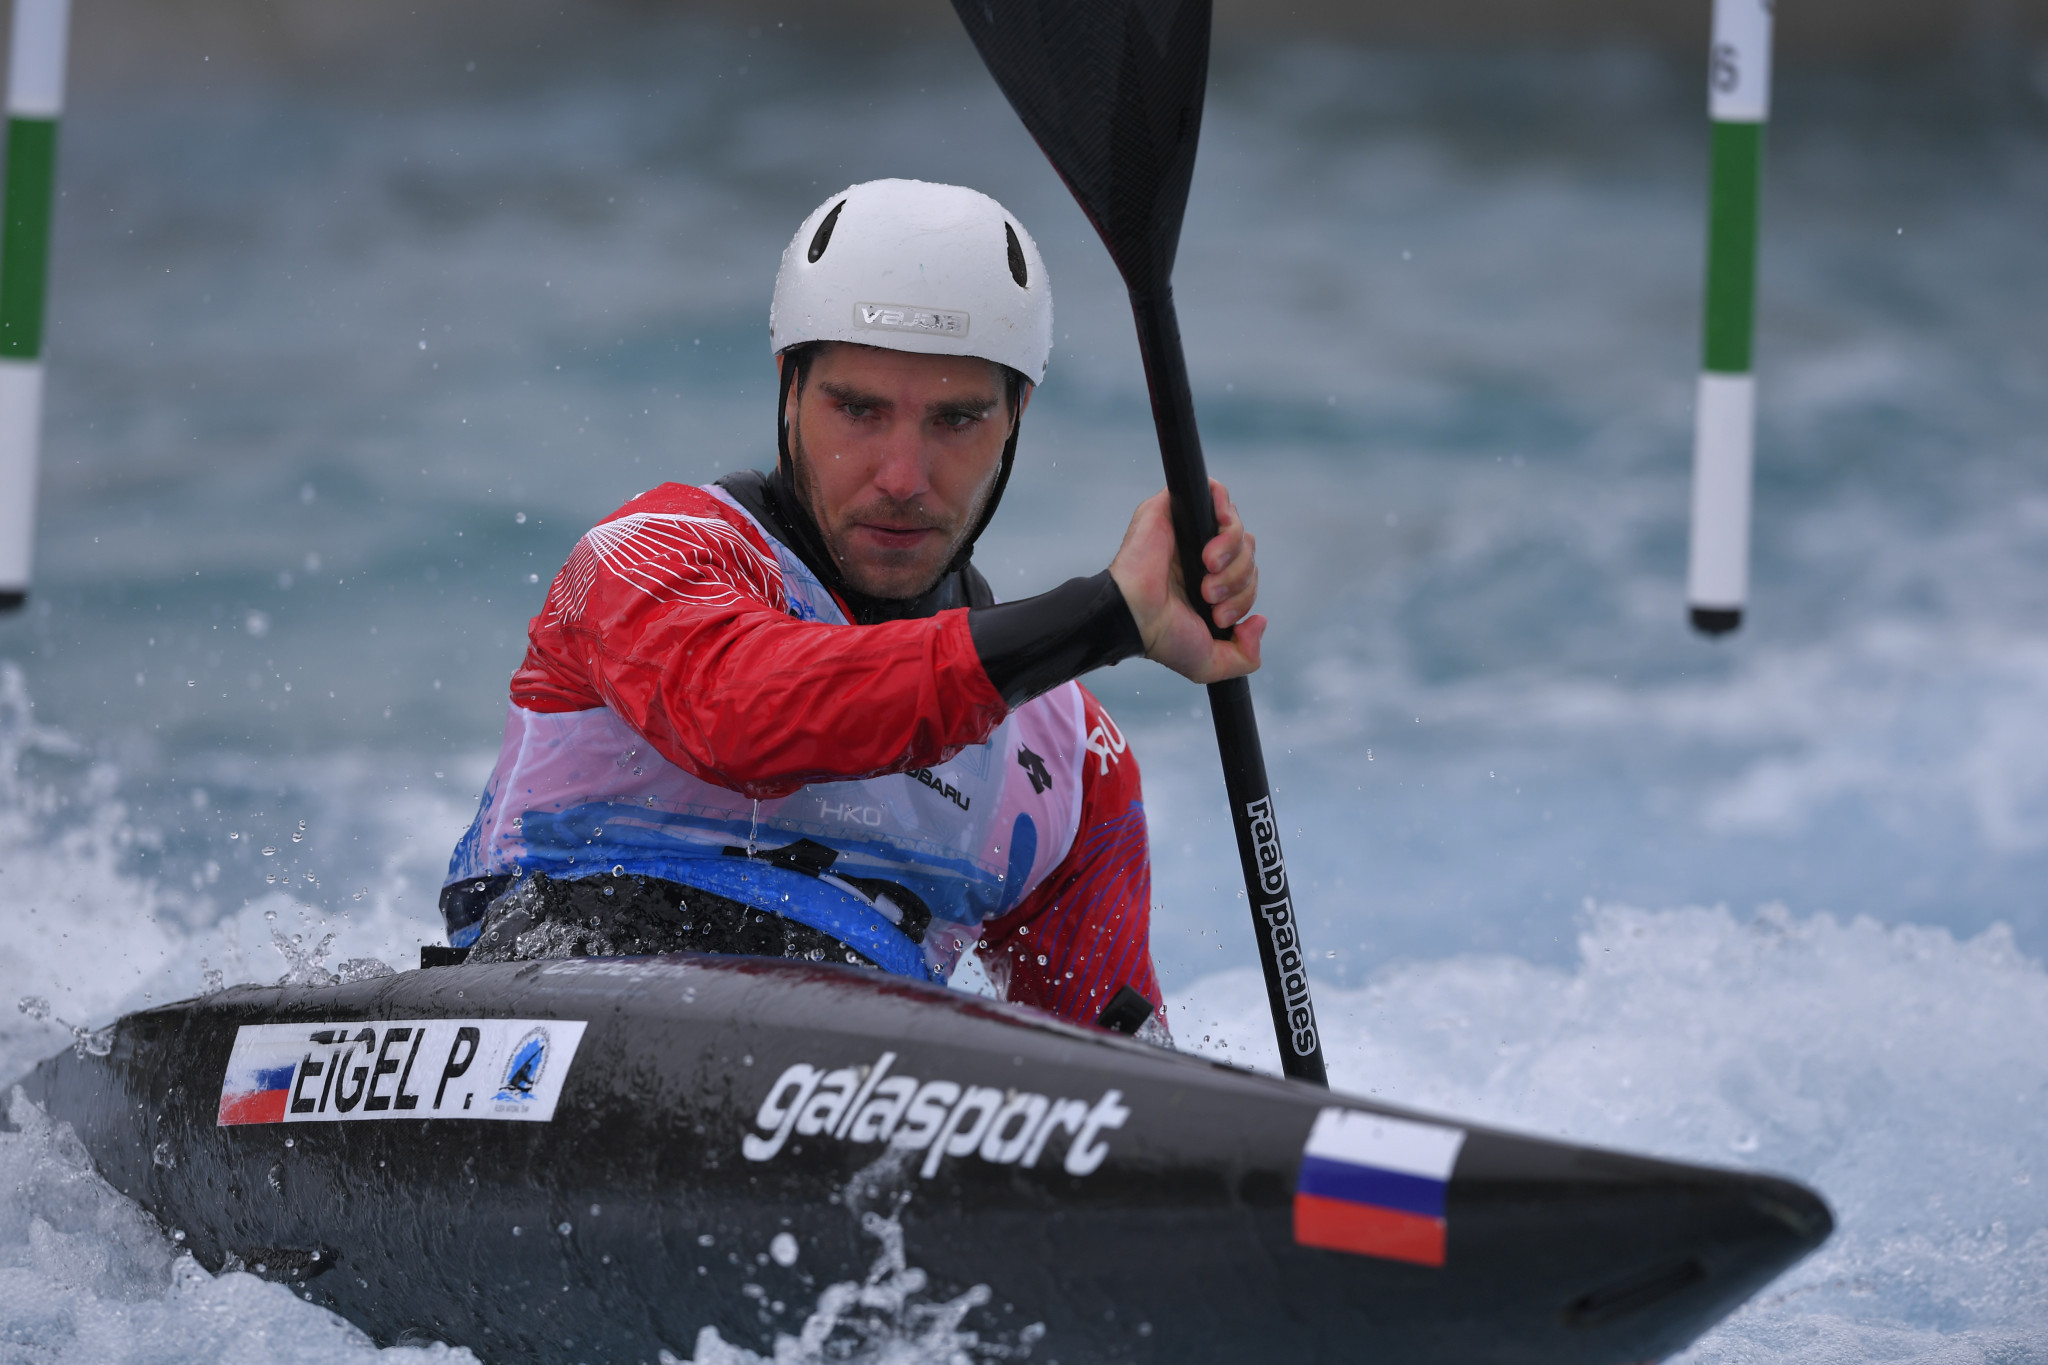 Eigel qualifies fastest in men's K1 at Tokyo 2020 canoe slalom test event